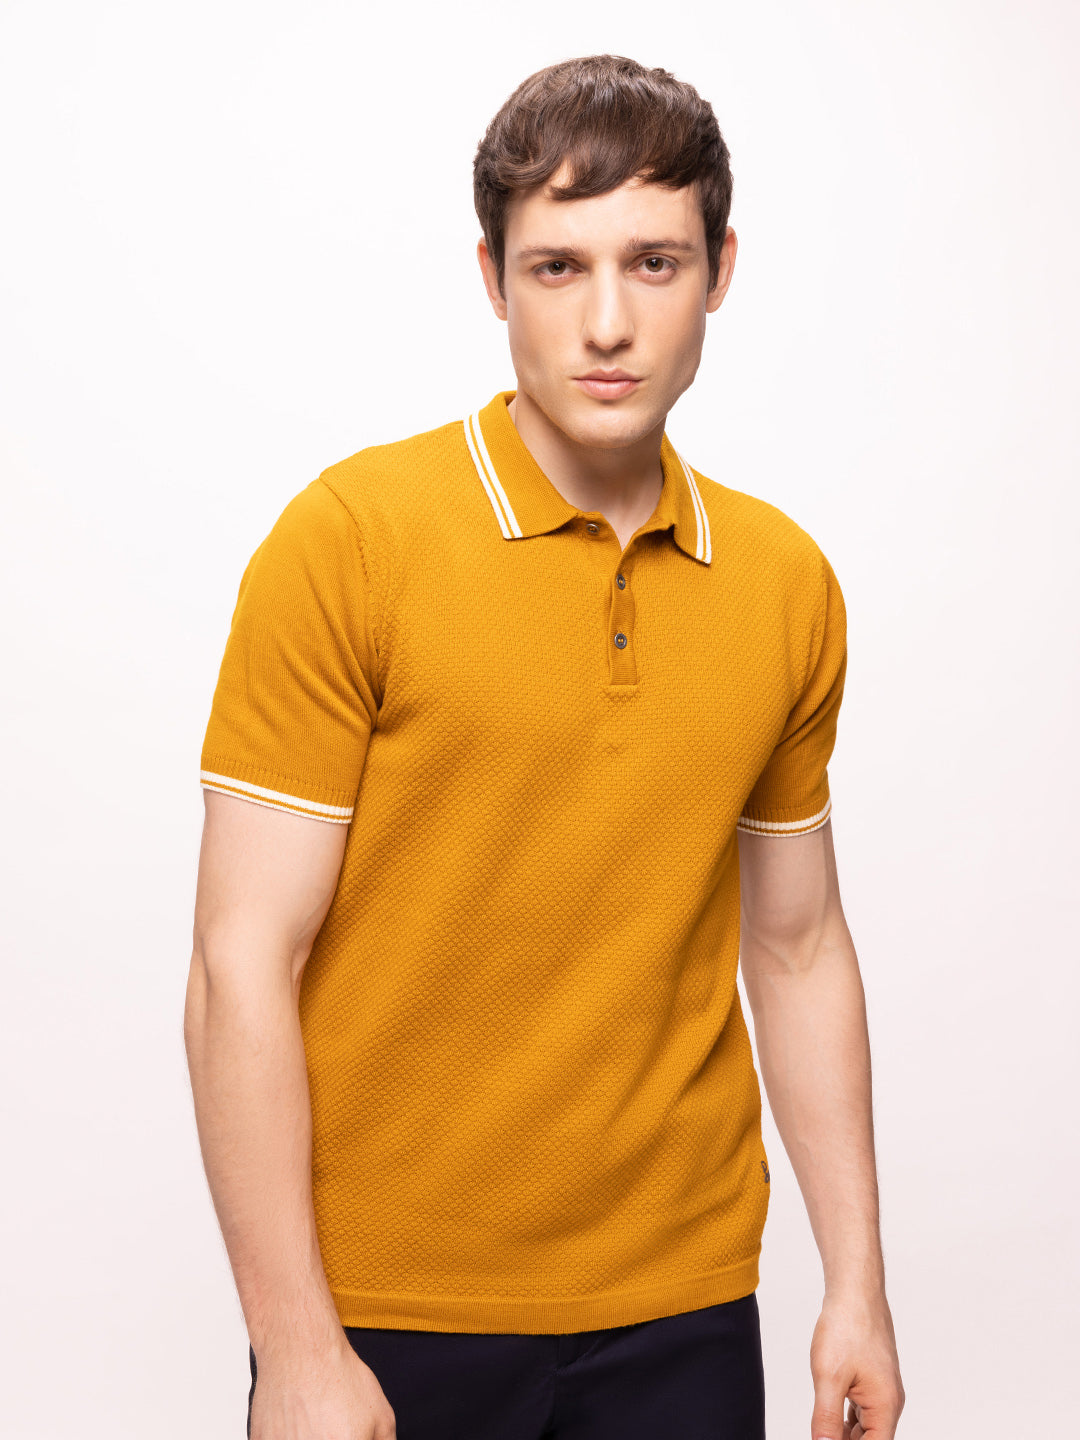 Bombay High Ochre Gold Men's Premium Cotton Knit Polo T-Shirt